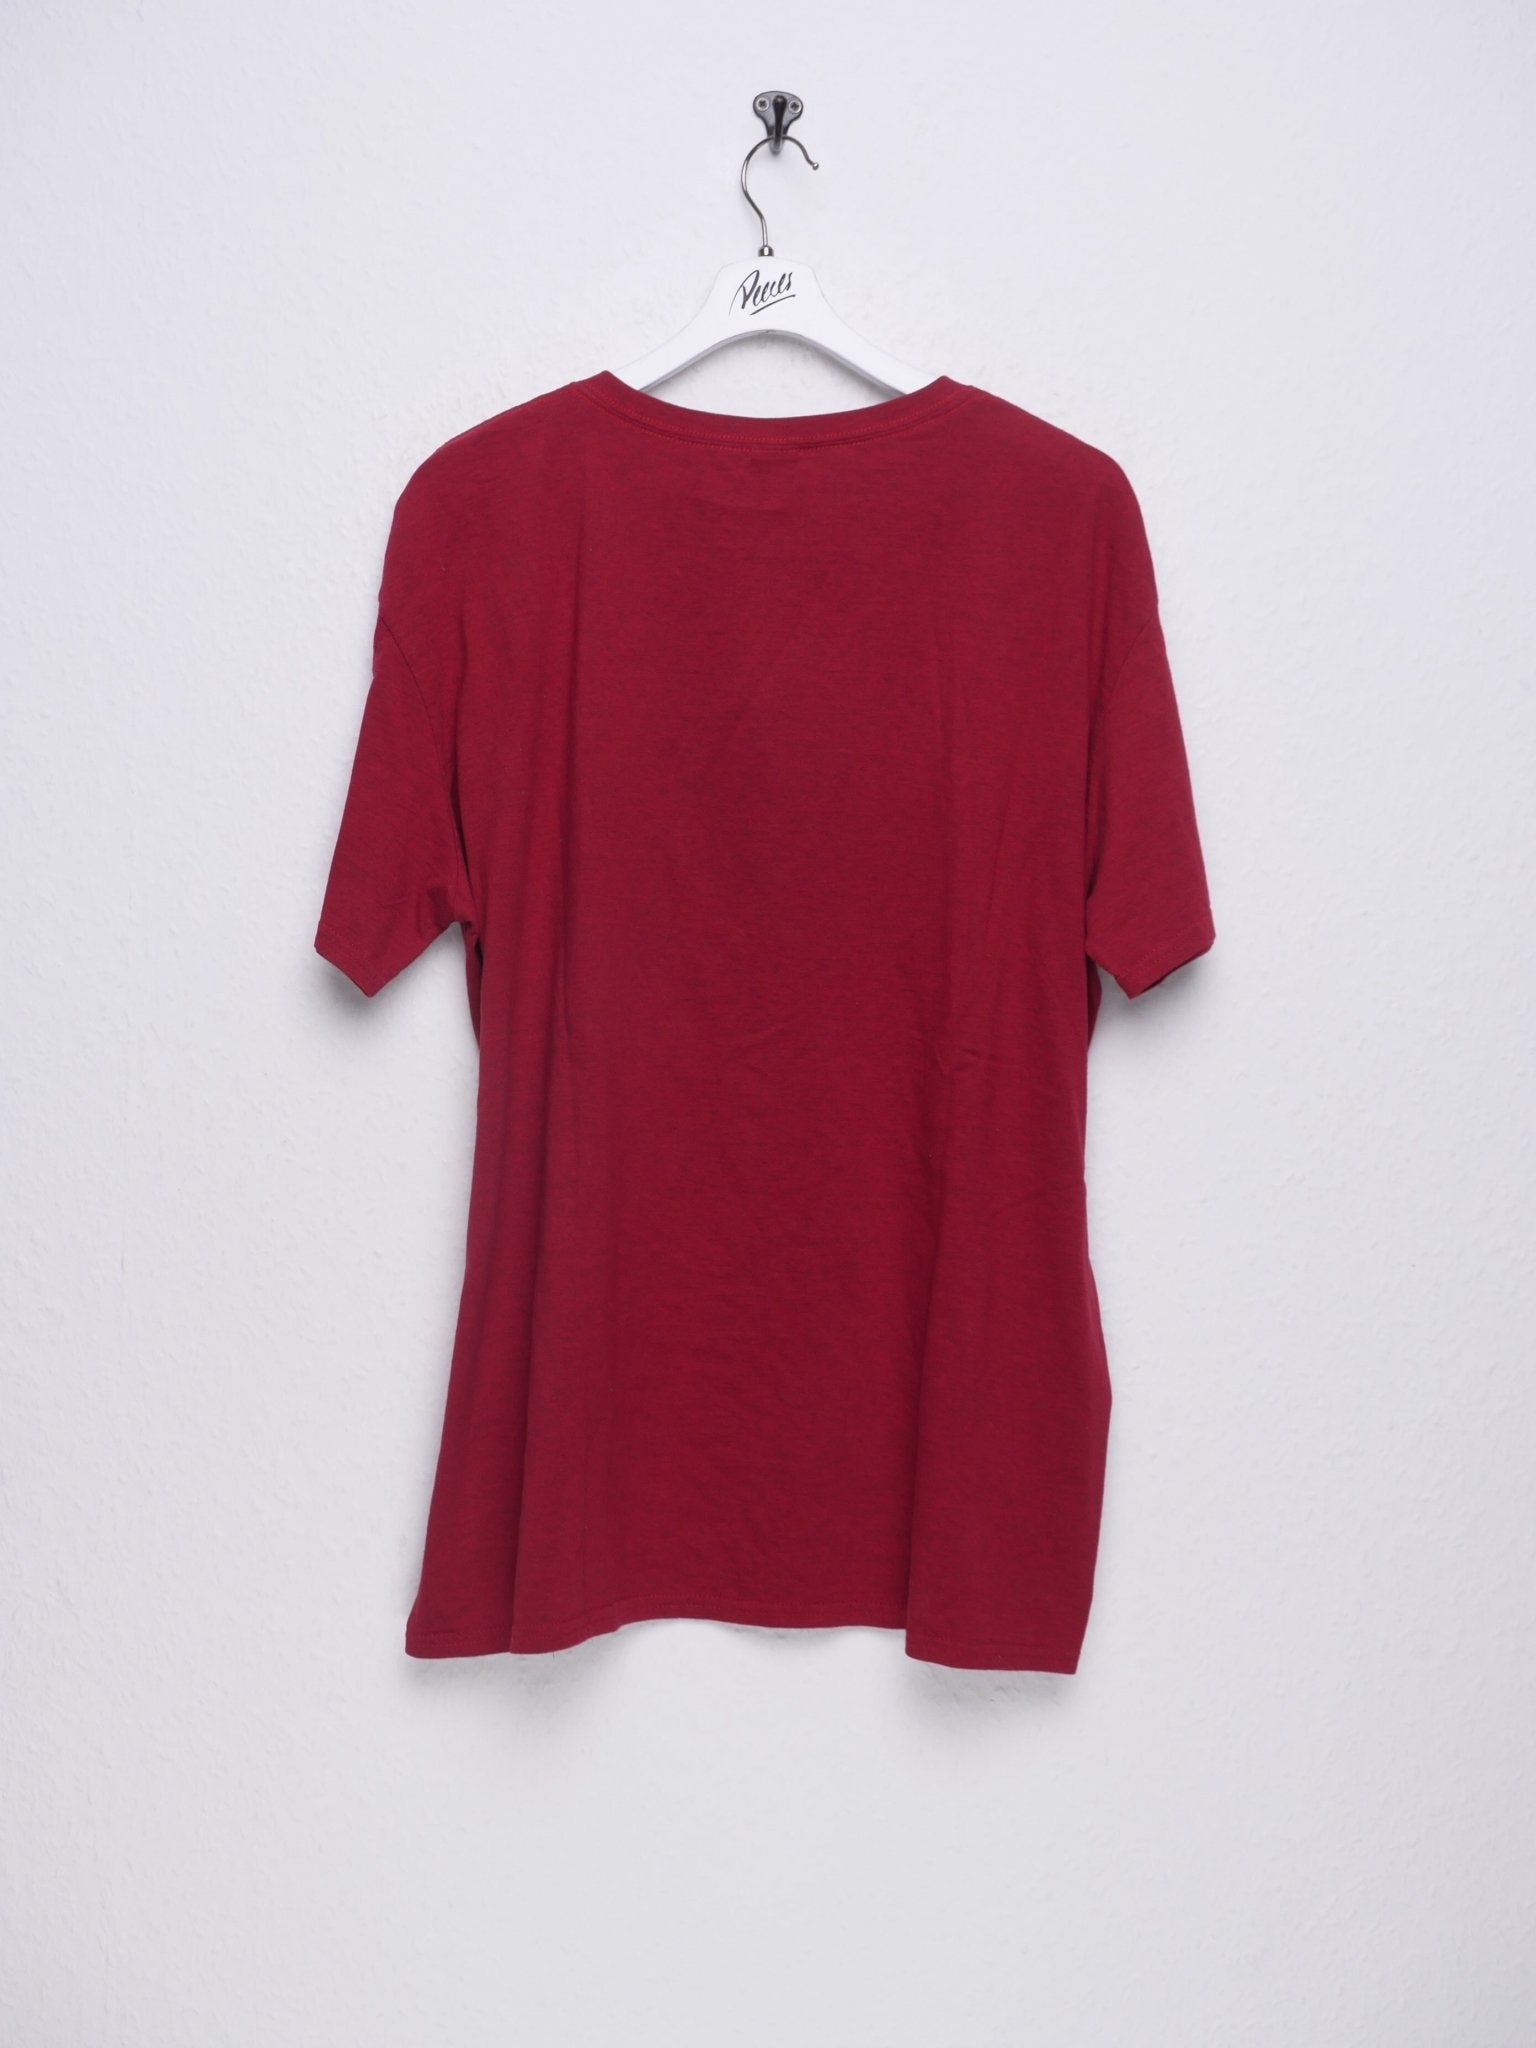 printed smoky hill red Shirt - Peeces